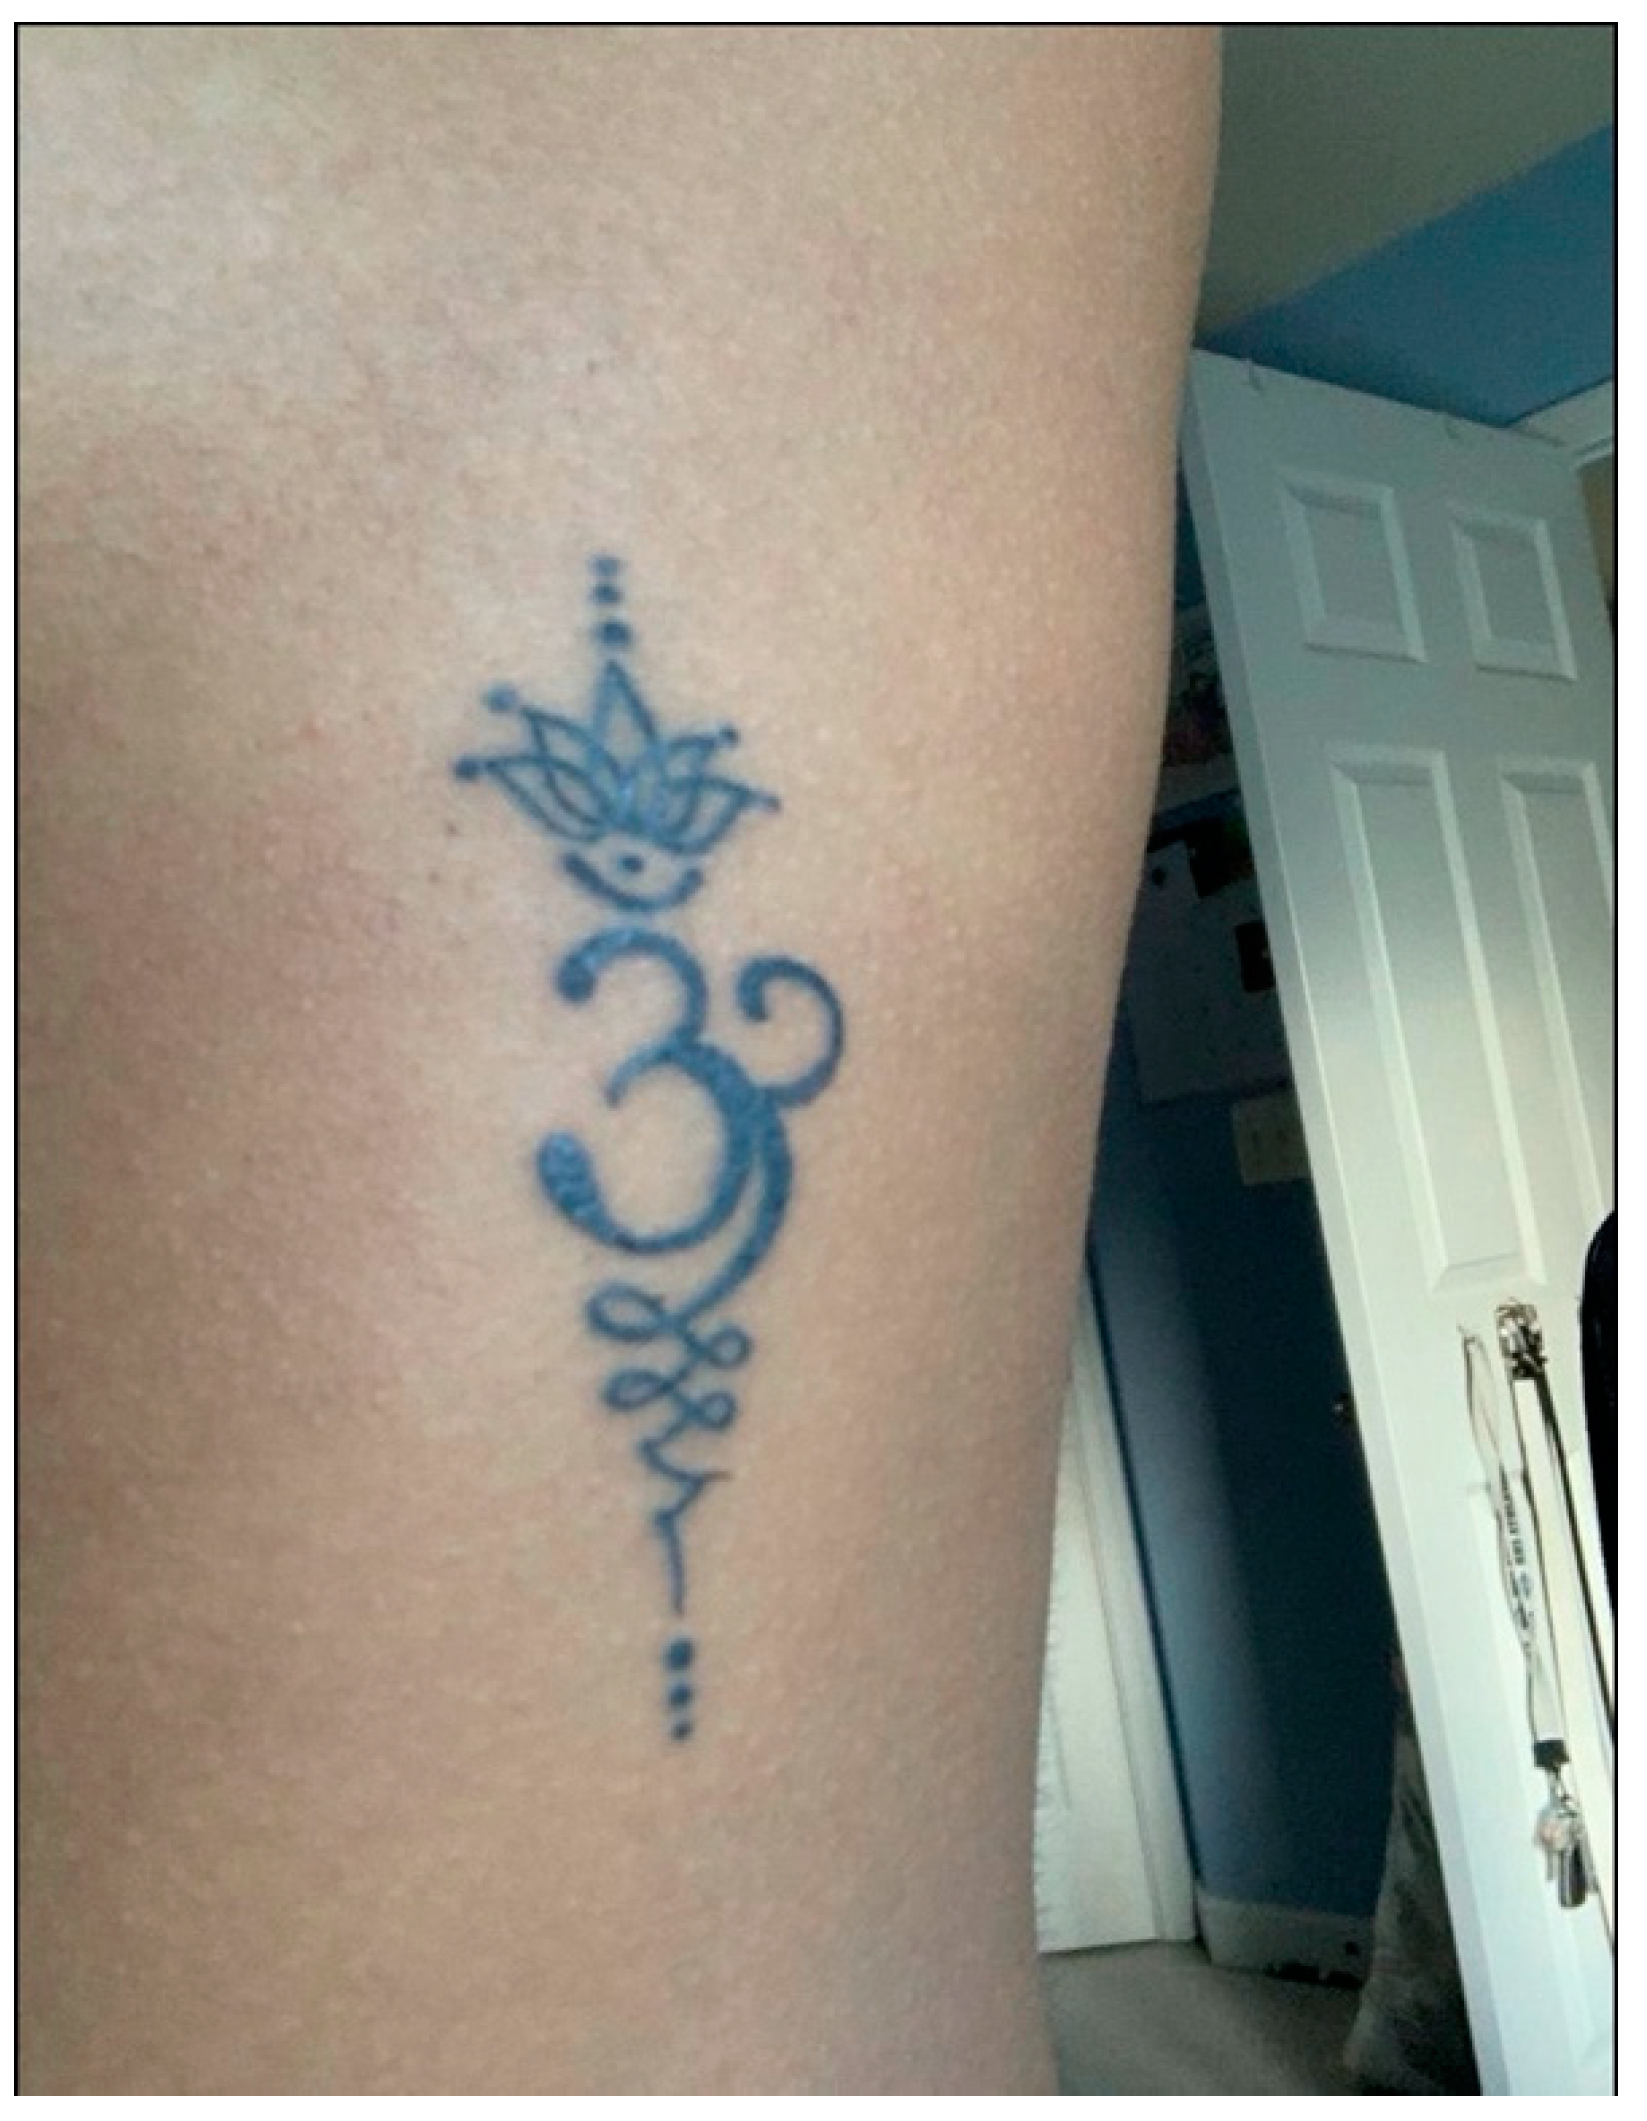 Signature Tattoo Training Institution & Studio, Kalamassery - Ganesh Tattoo  Hindu Religious Tattoo Body Art Tattooed . For more info visit us at  https://signaturetattoostudio.nowfloats.com/ganesh-tattoo-hindu-religiou/b60?utm_source=facebookpage  | Facebook